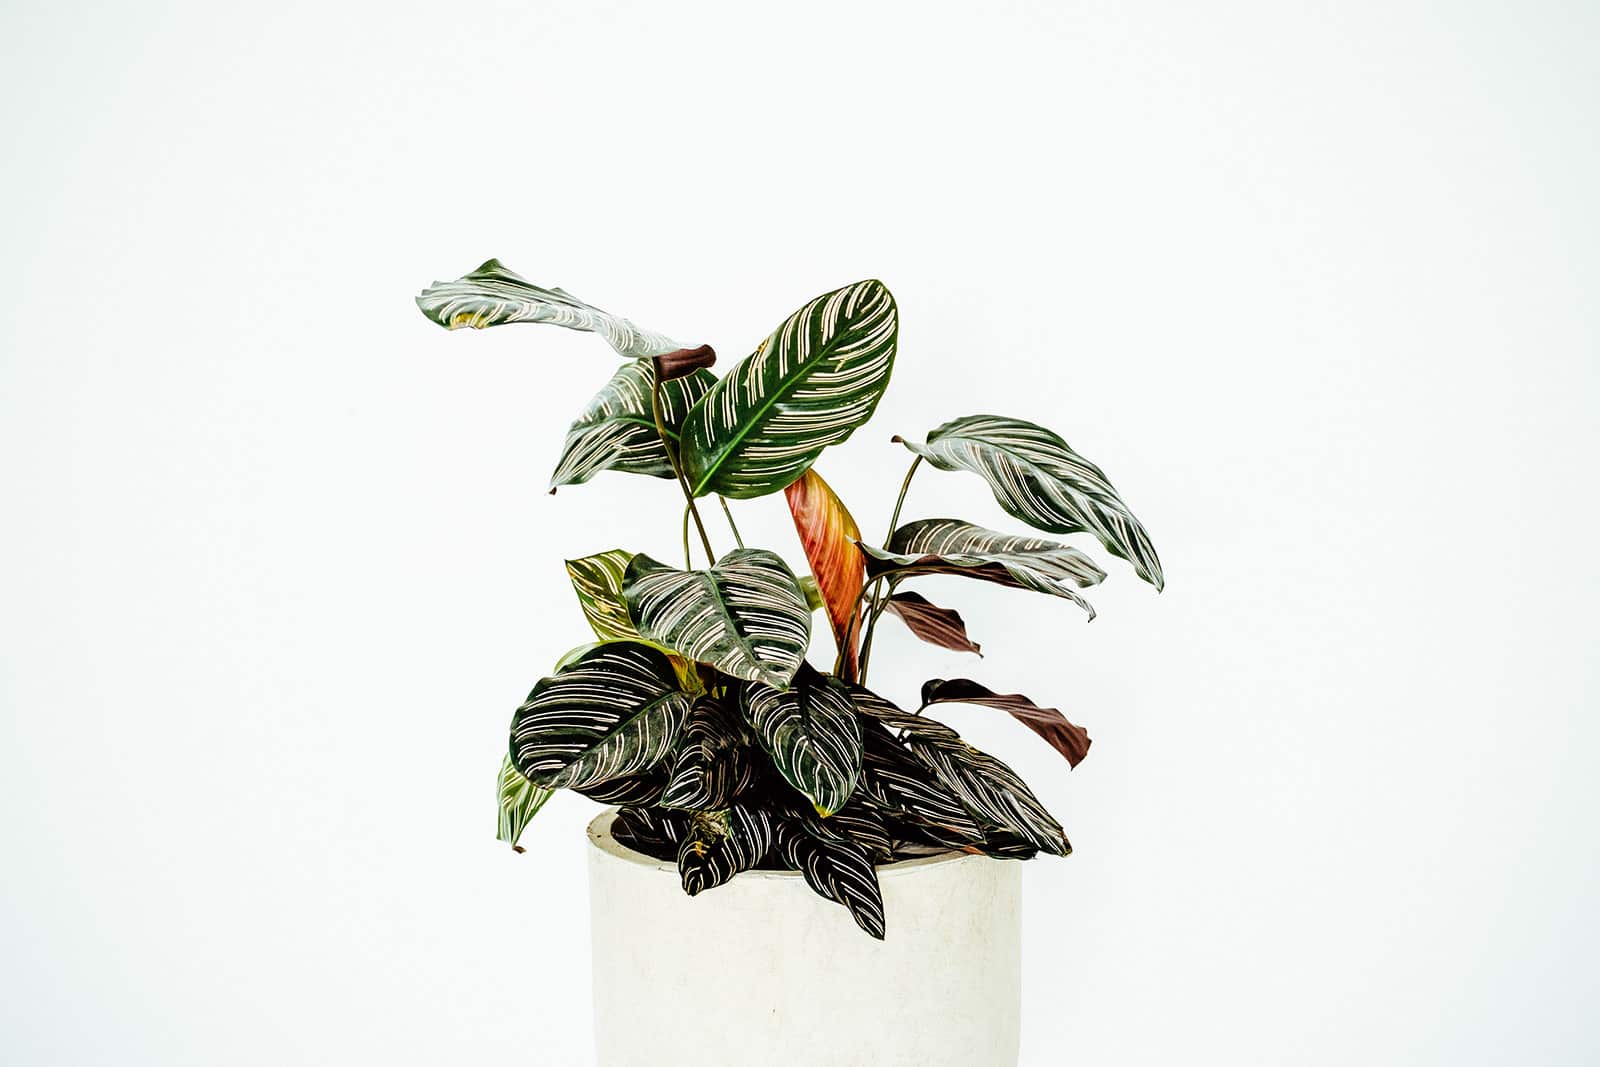 Calathea ornata plant in a modern white concrete pot against a white backdrop